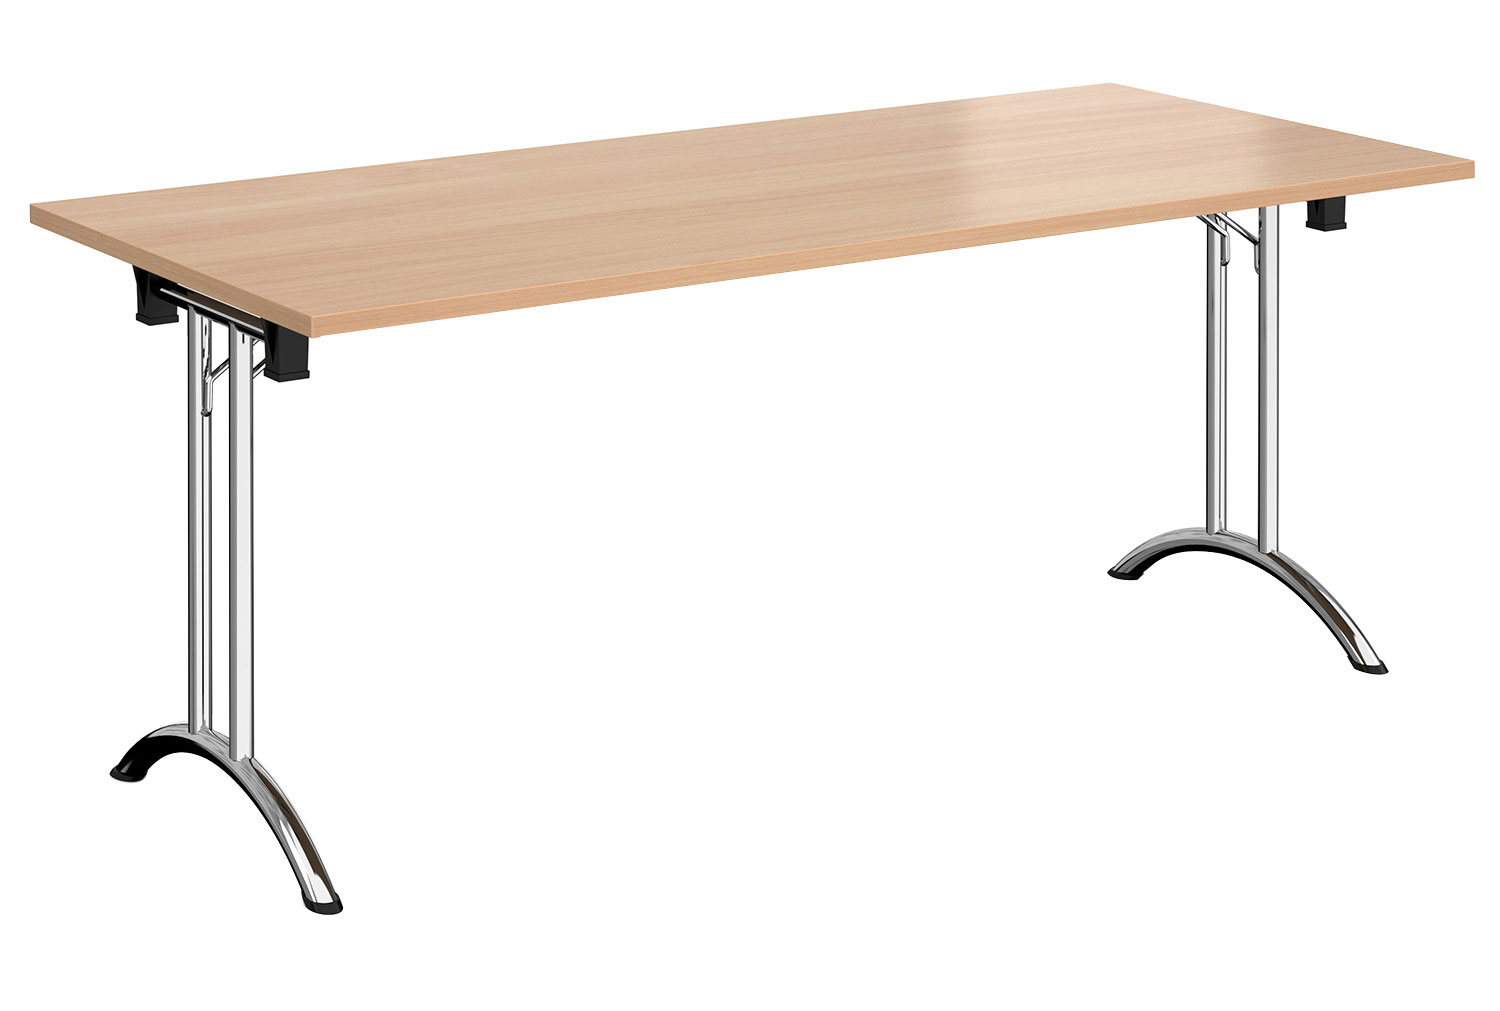 Blaga Rectangular Folding Table, 180wx80dx73h (cm), Beech